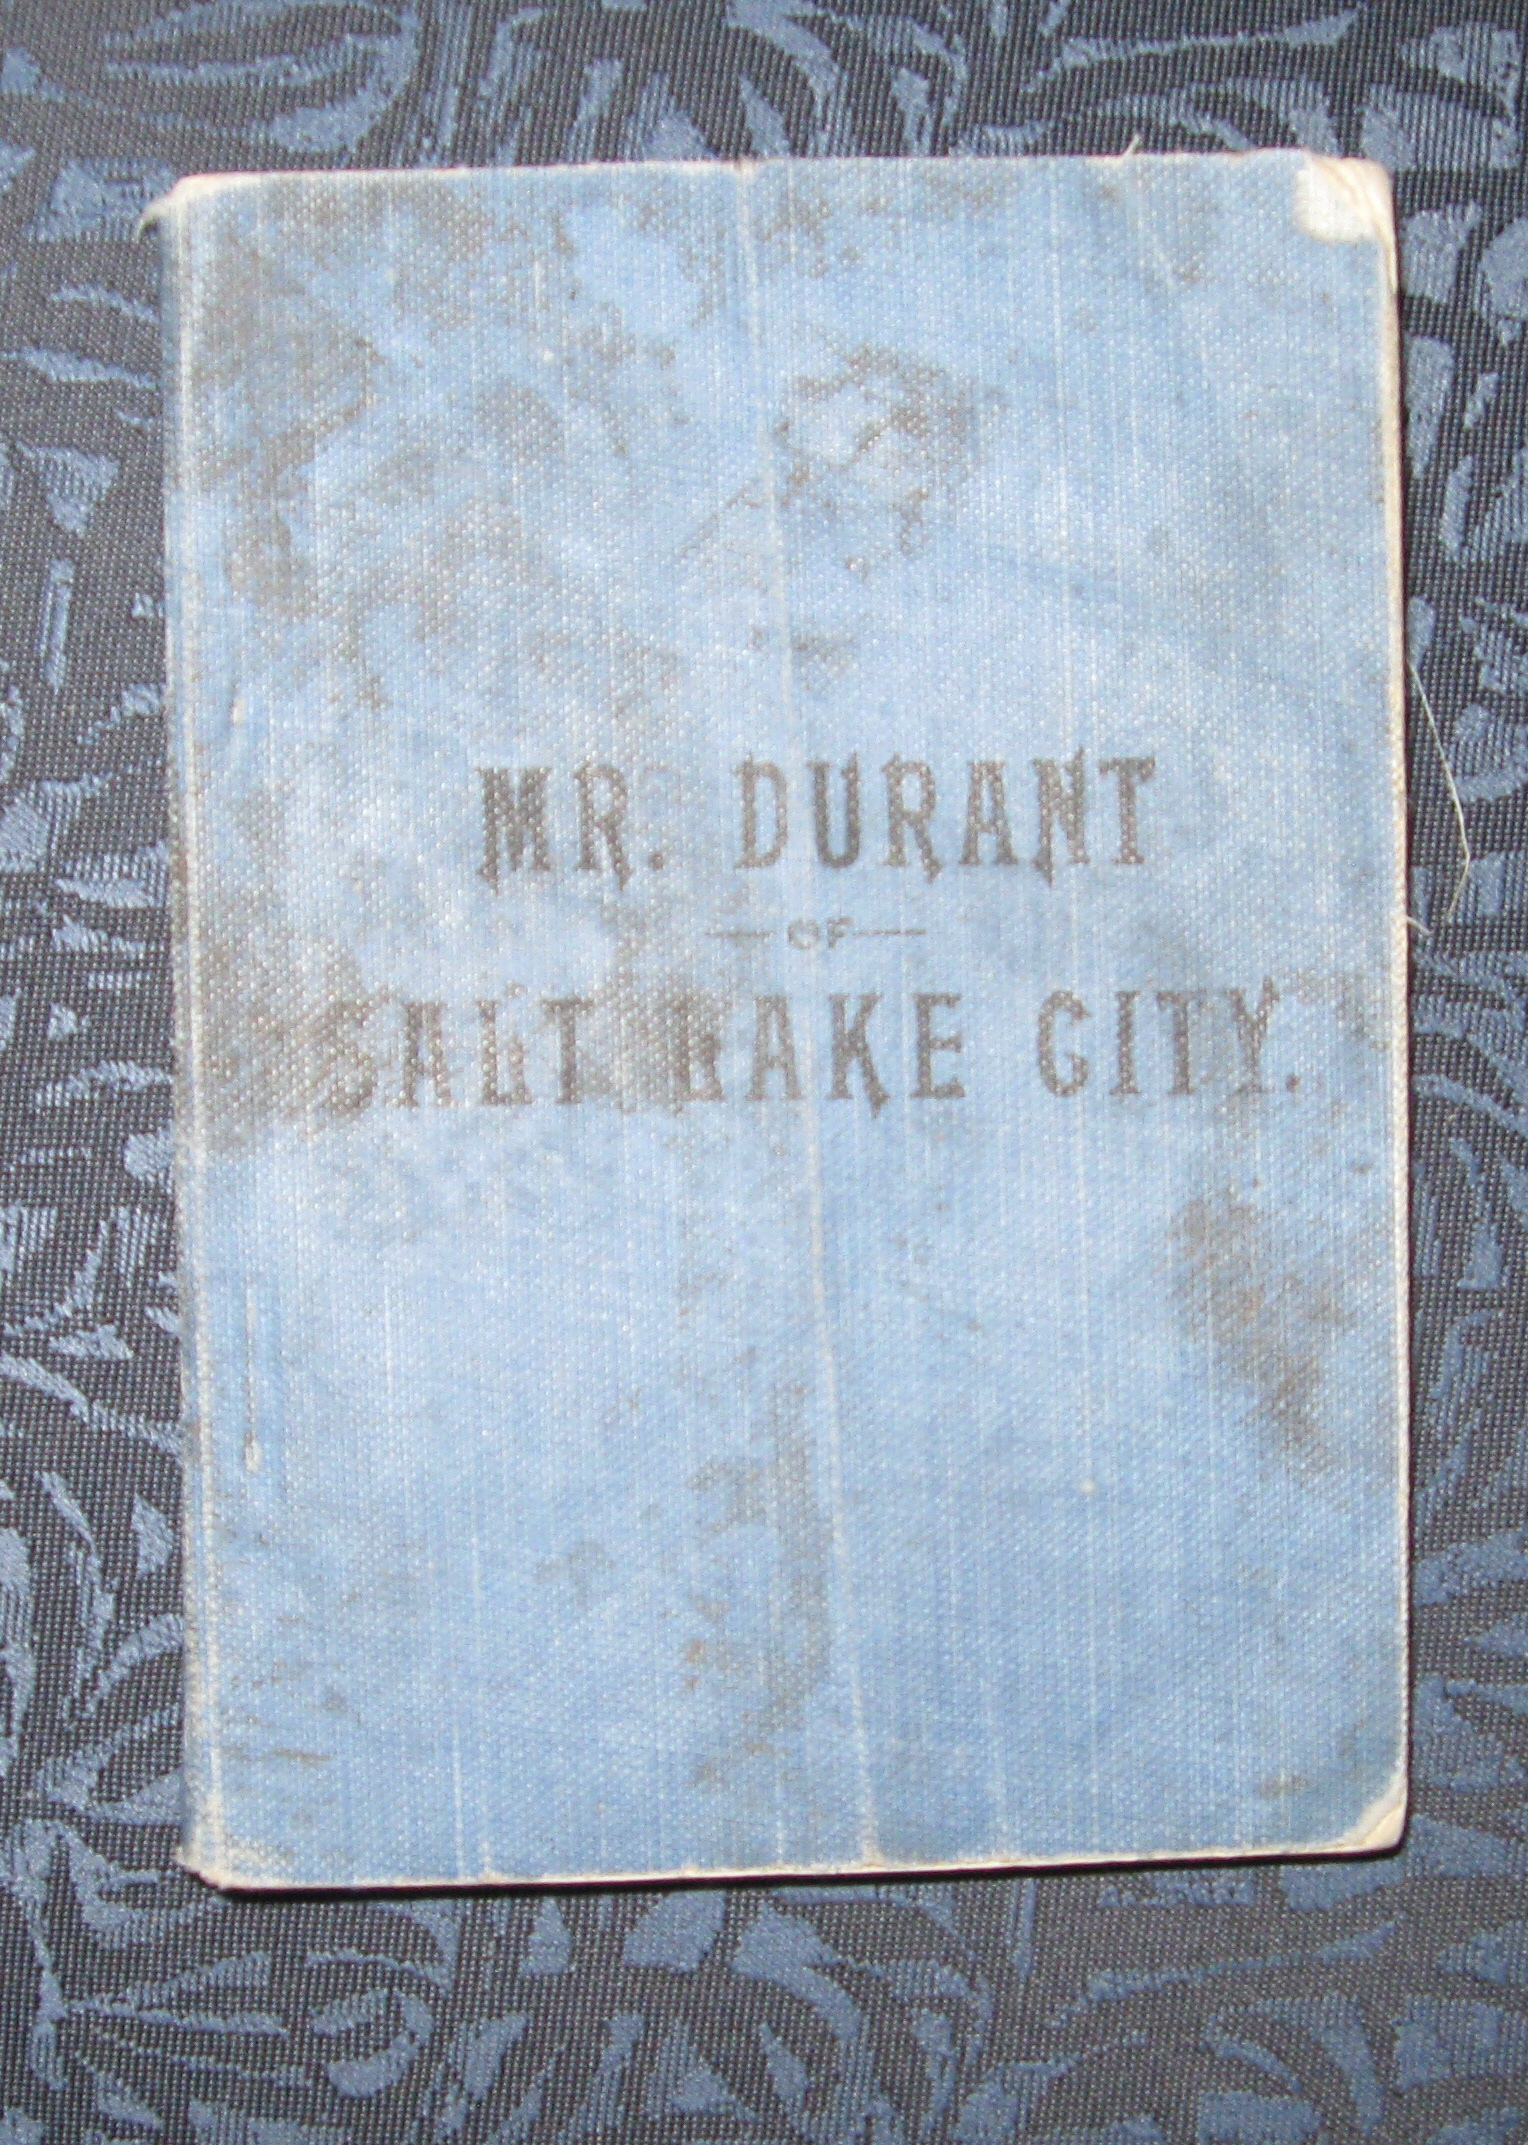 Image for MR. DURANT OF SALT LAKE CITY - That Mormon